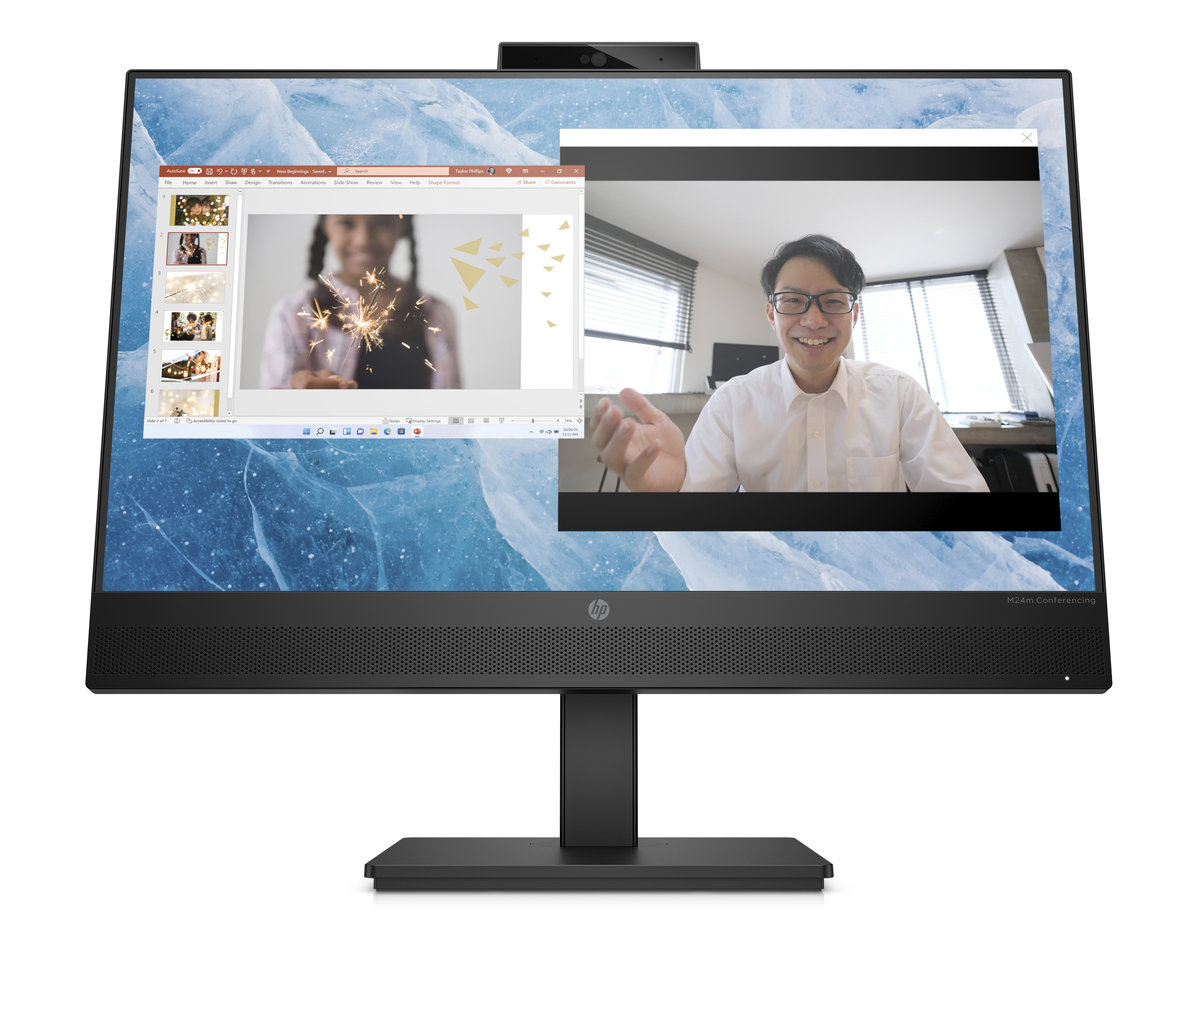 HP M24m Conferencing Monitor (678U5AA#ABB)